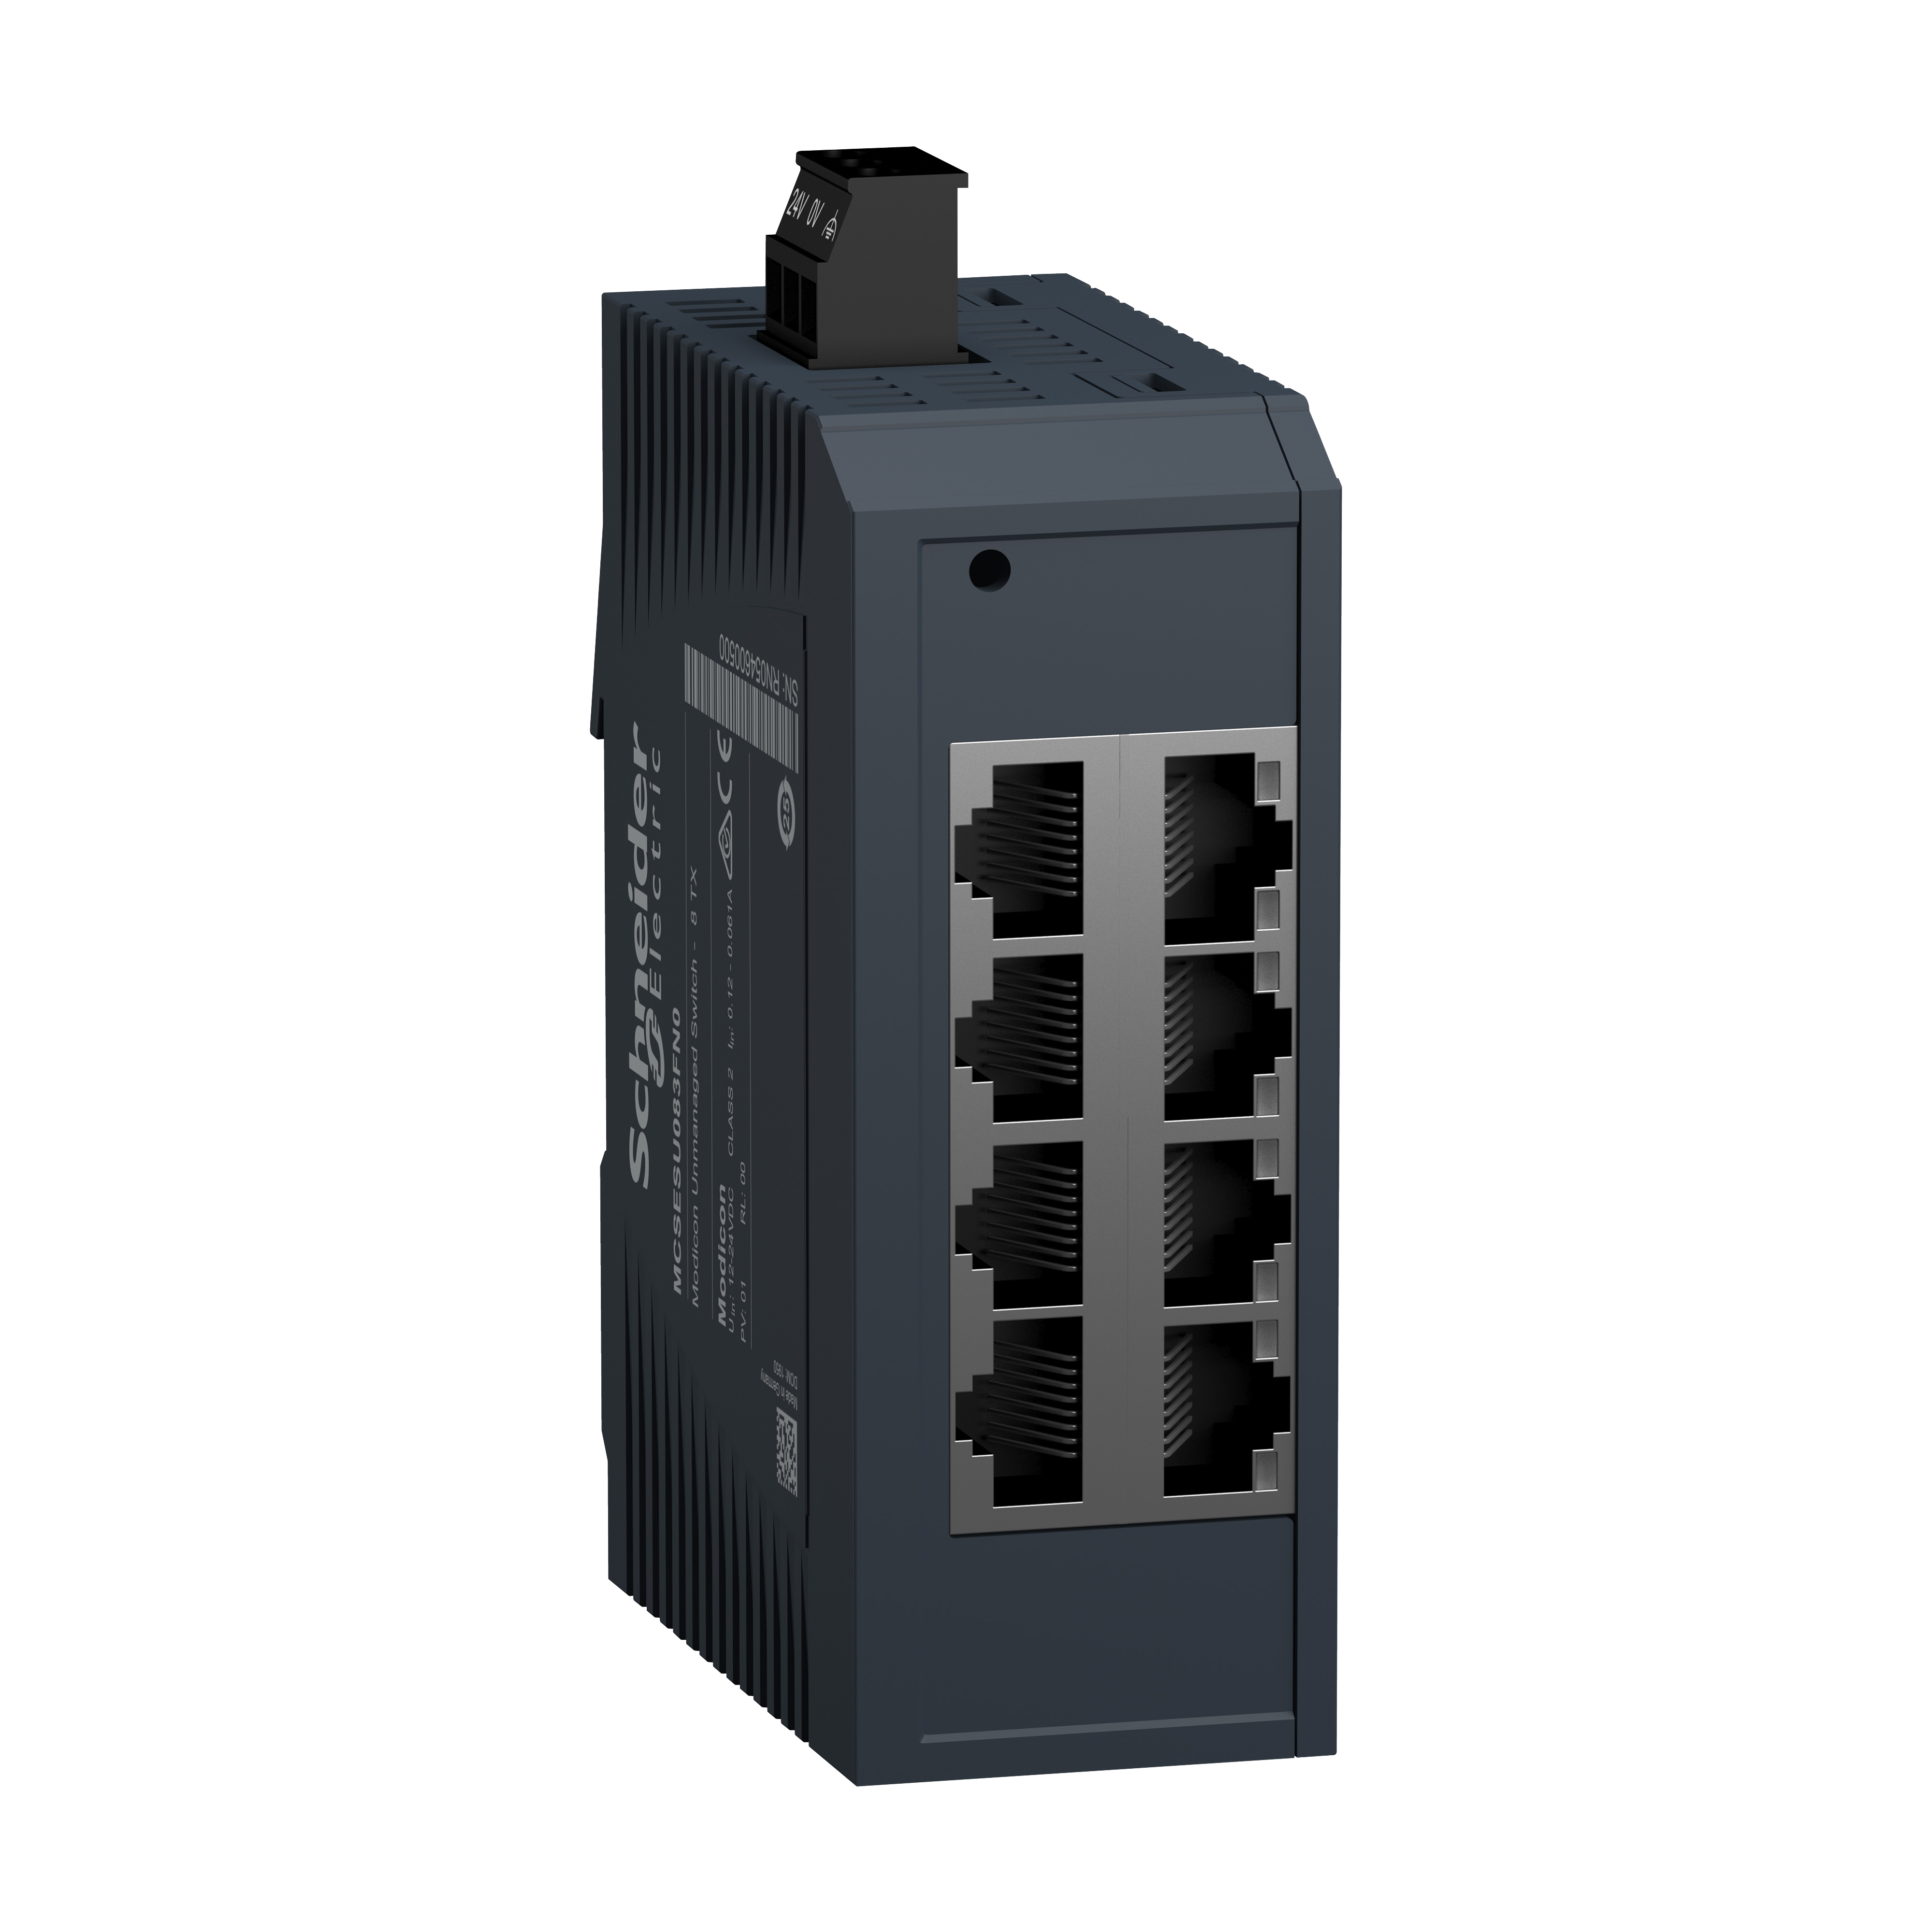 Modicon: Ethernet TCP/IP switch, neupravljivi, 10/100 BASE-TX, 8 RJ45 portova, 24VDC